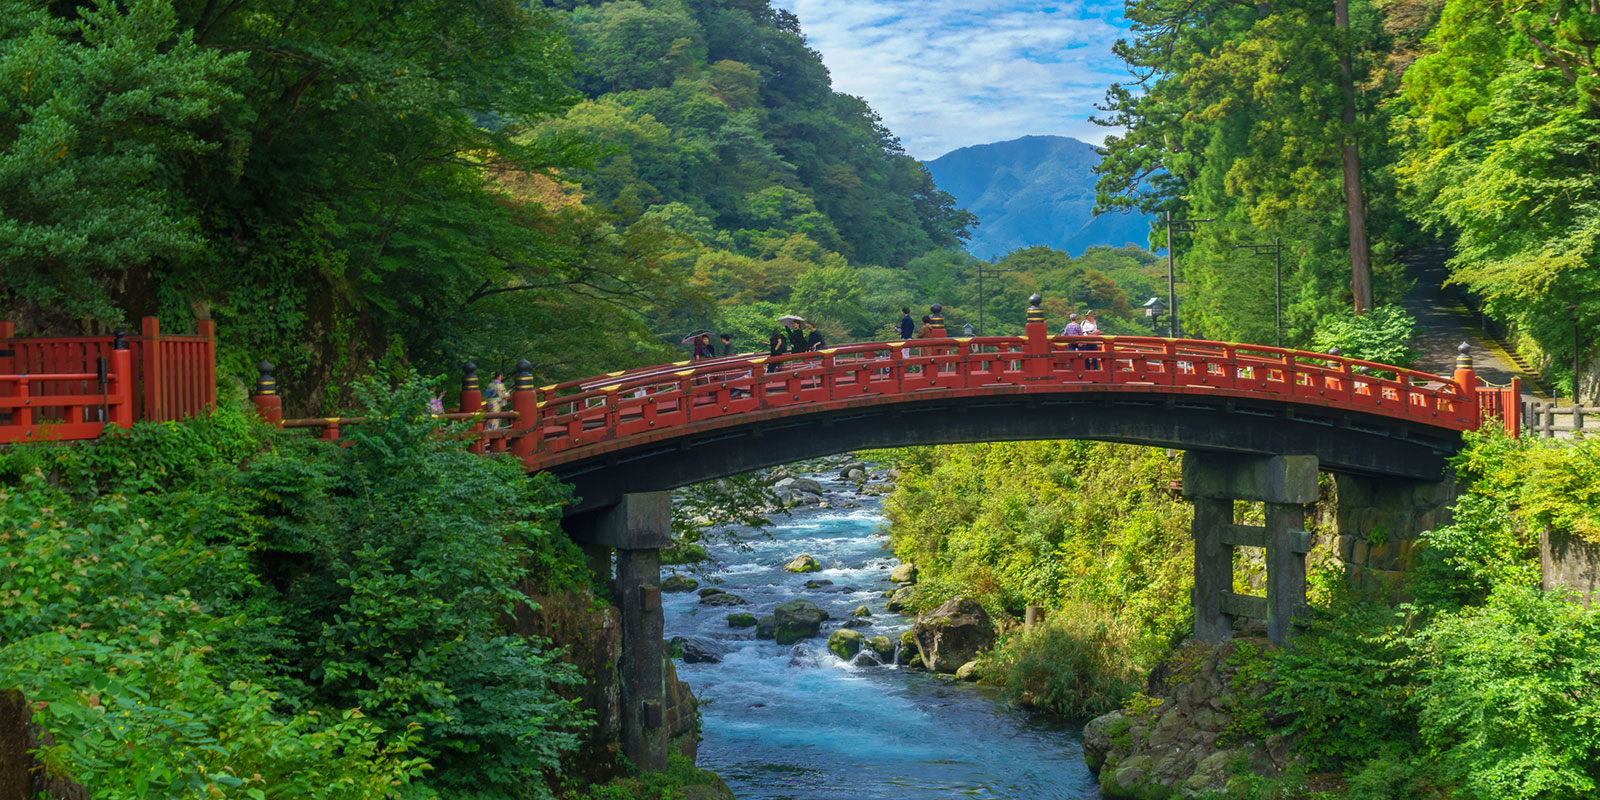 Shinkyo Bridge at the entrance to Nikko’s shrines and temples | Rndmst/Dreamstime